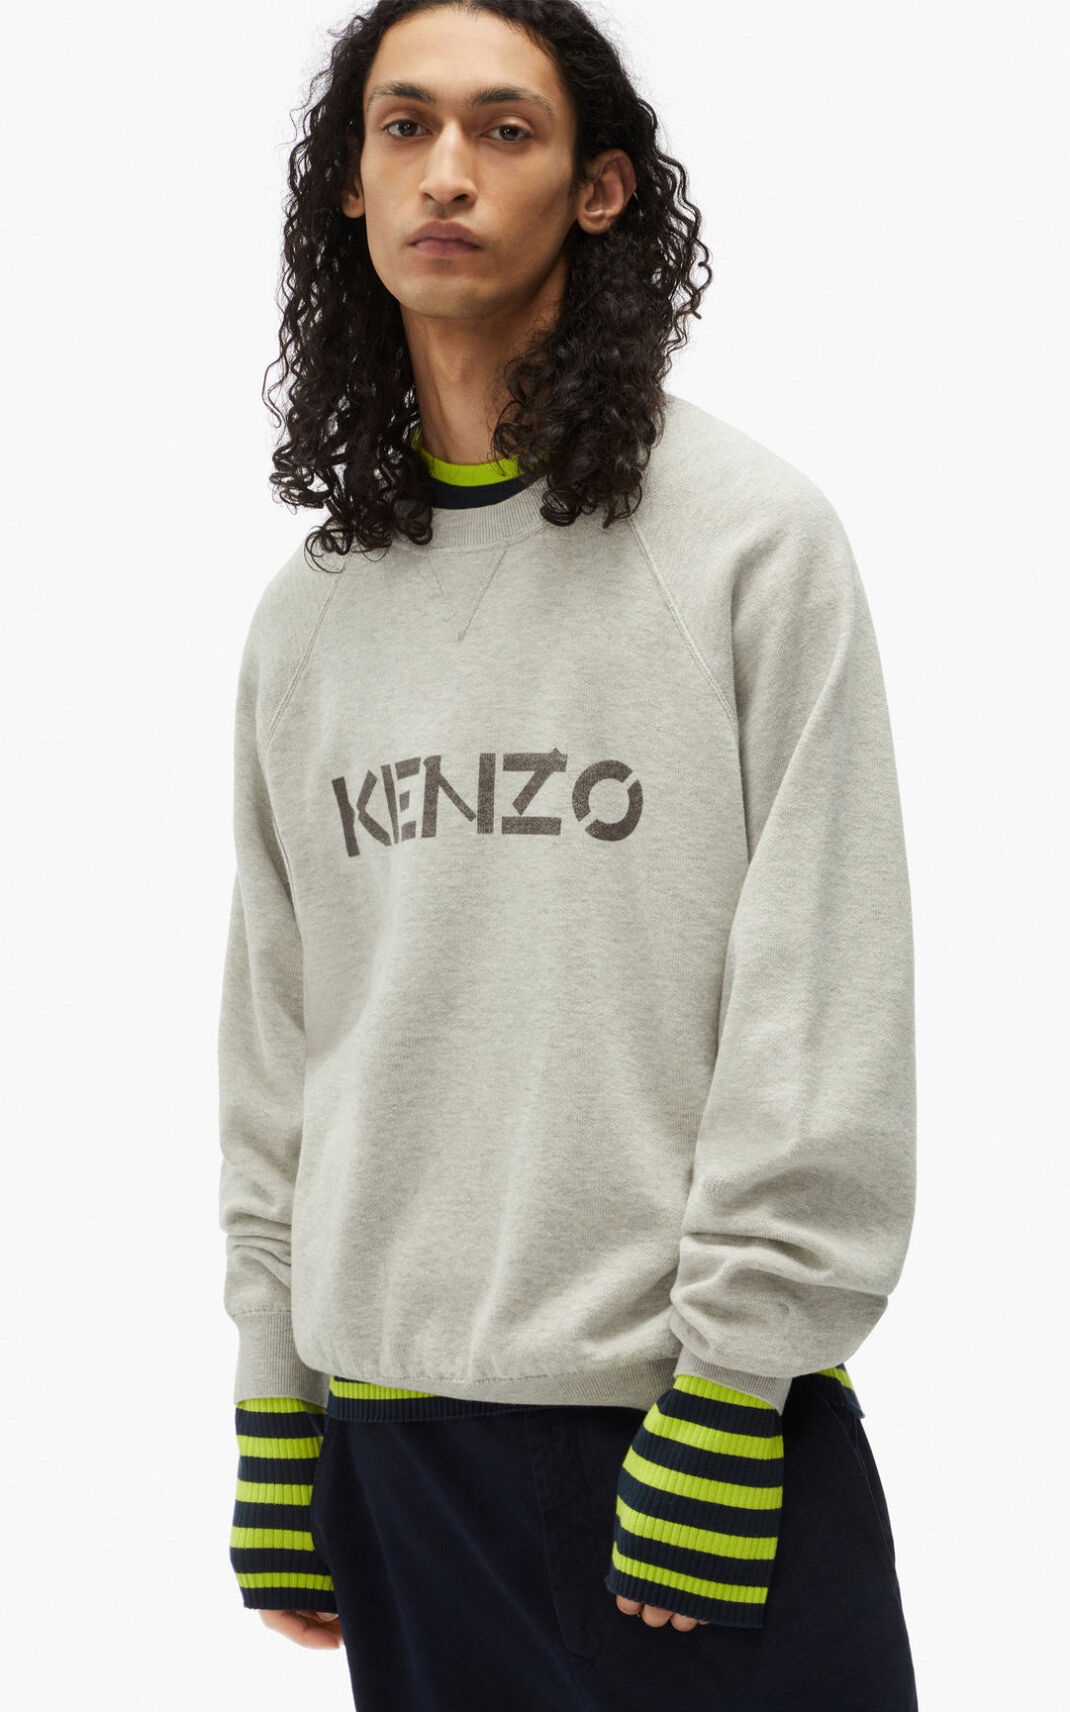 KENZO logo jumper - 2